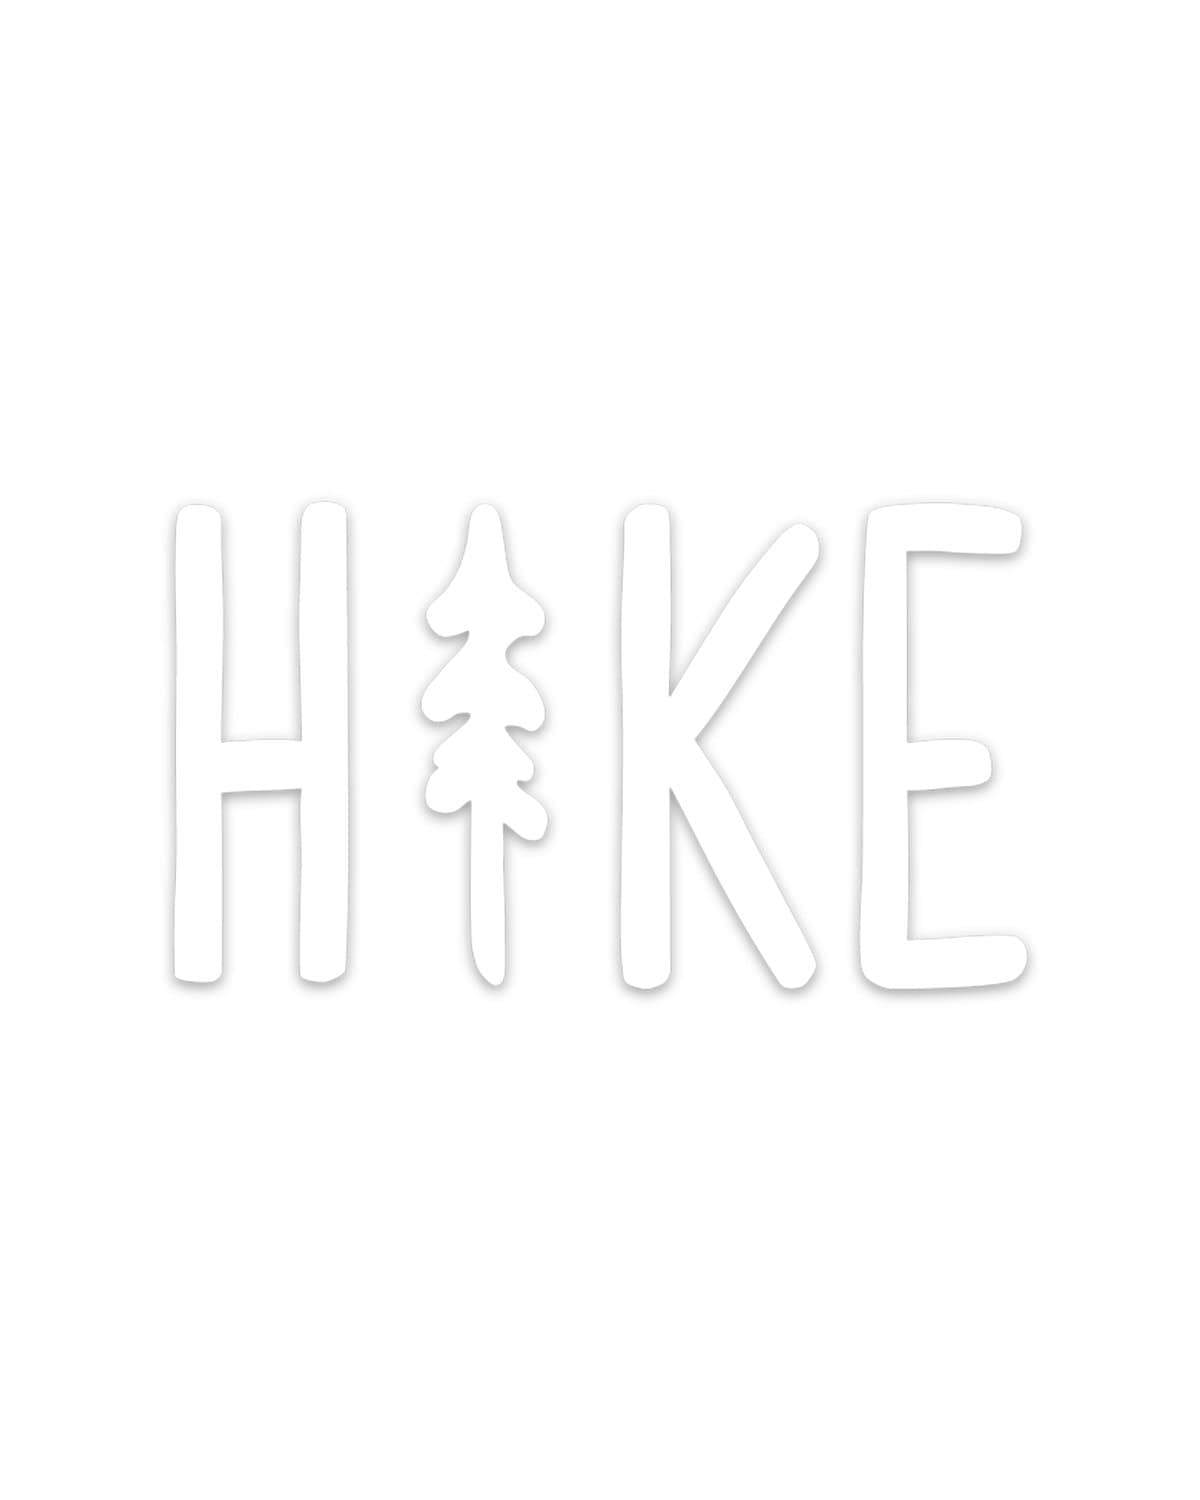 HIKE | Decal - Keep Nature Wild